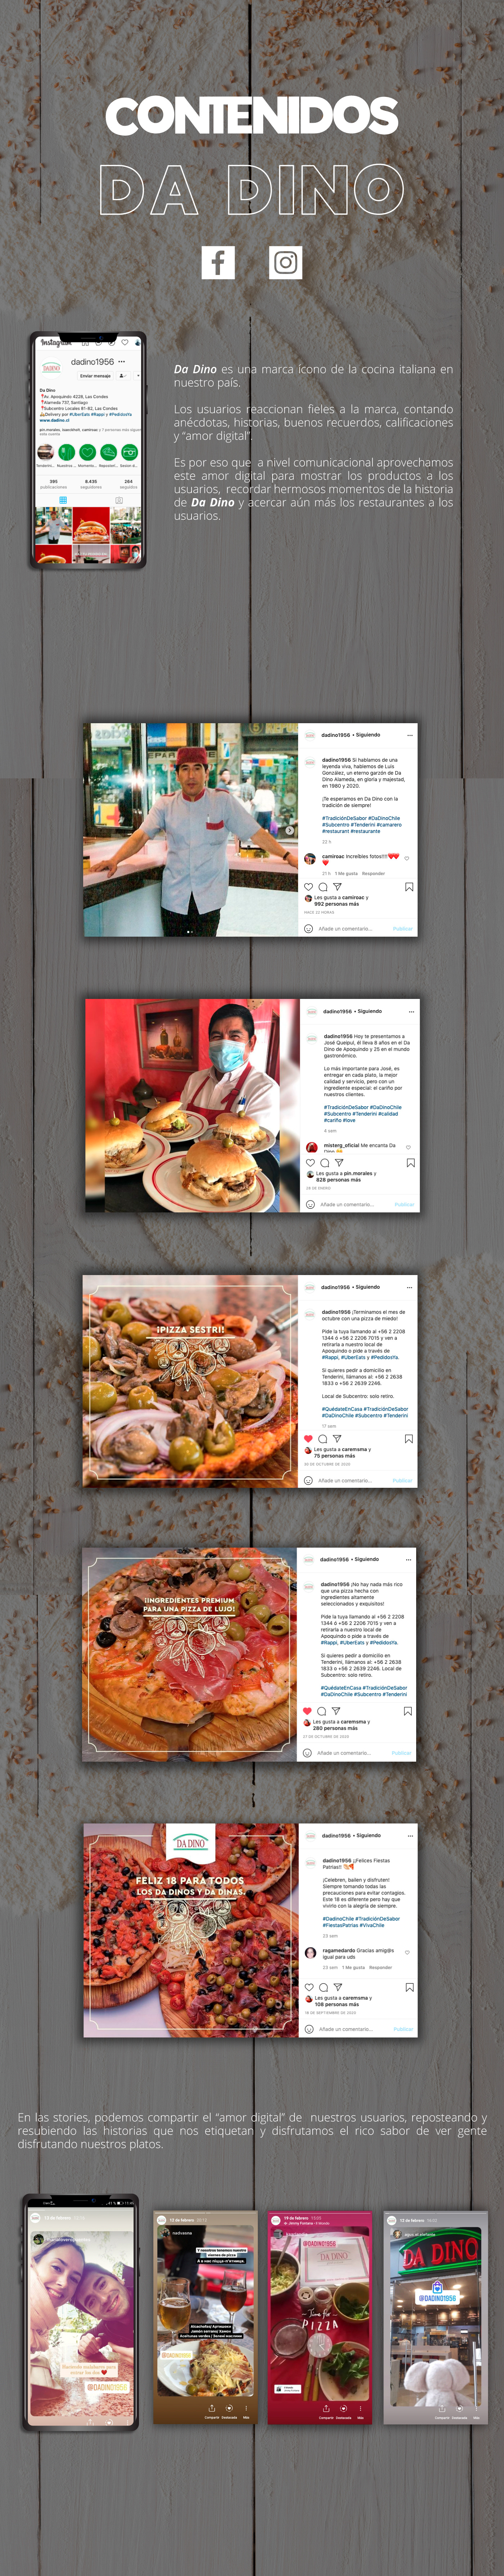 community manager da dino facebook Food  instagram Pizza restaurante social media